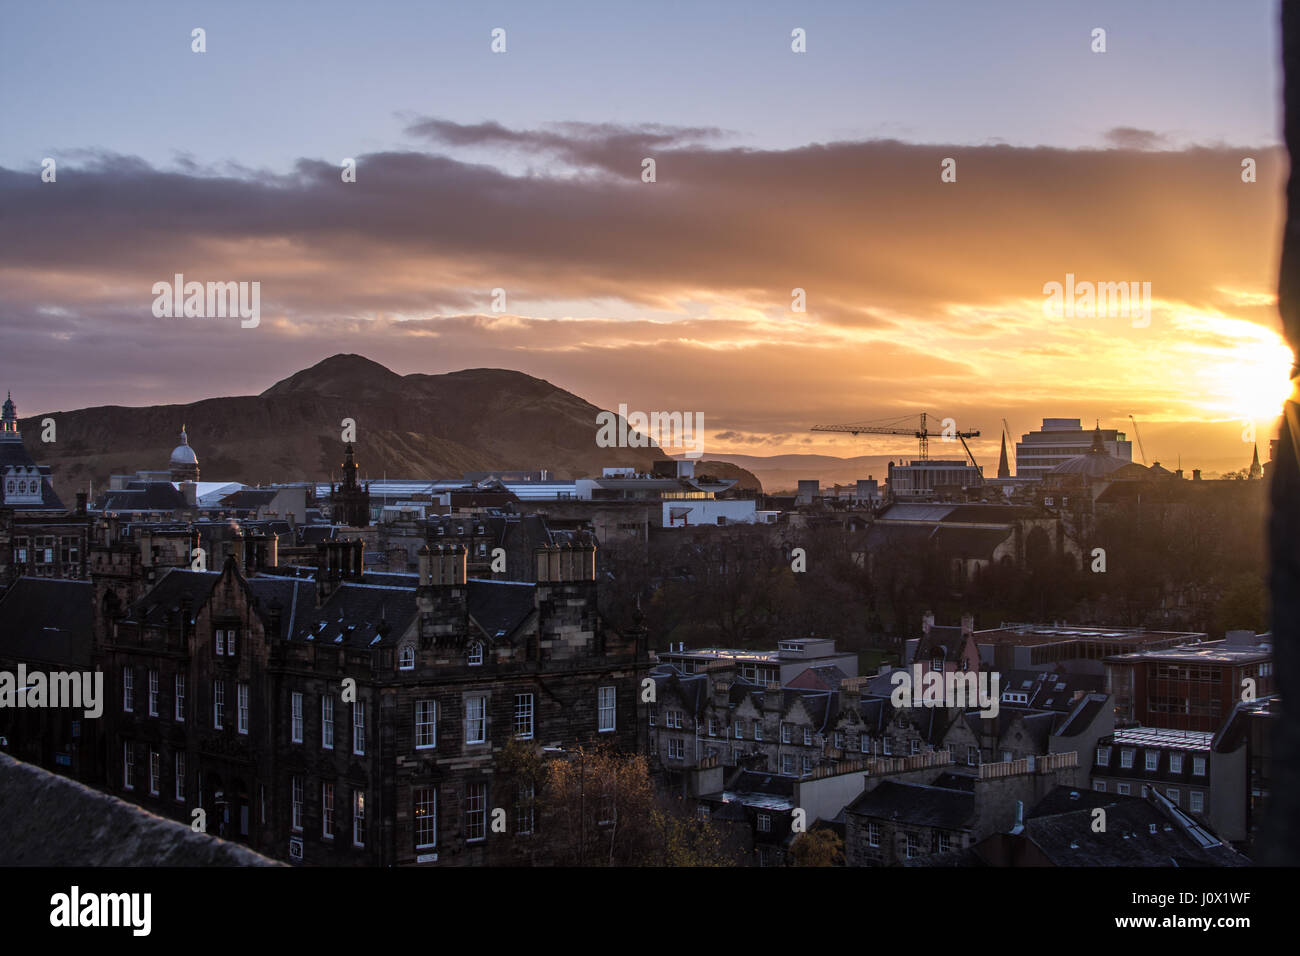 Sunrise over Edinburgh as seen from Edinburgh's Castle square Stock Photo